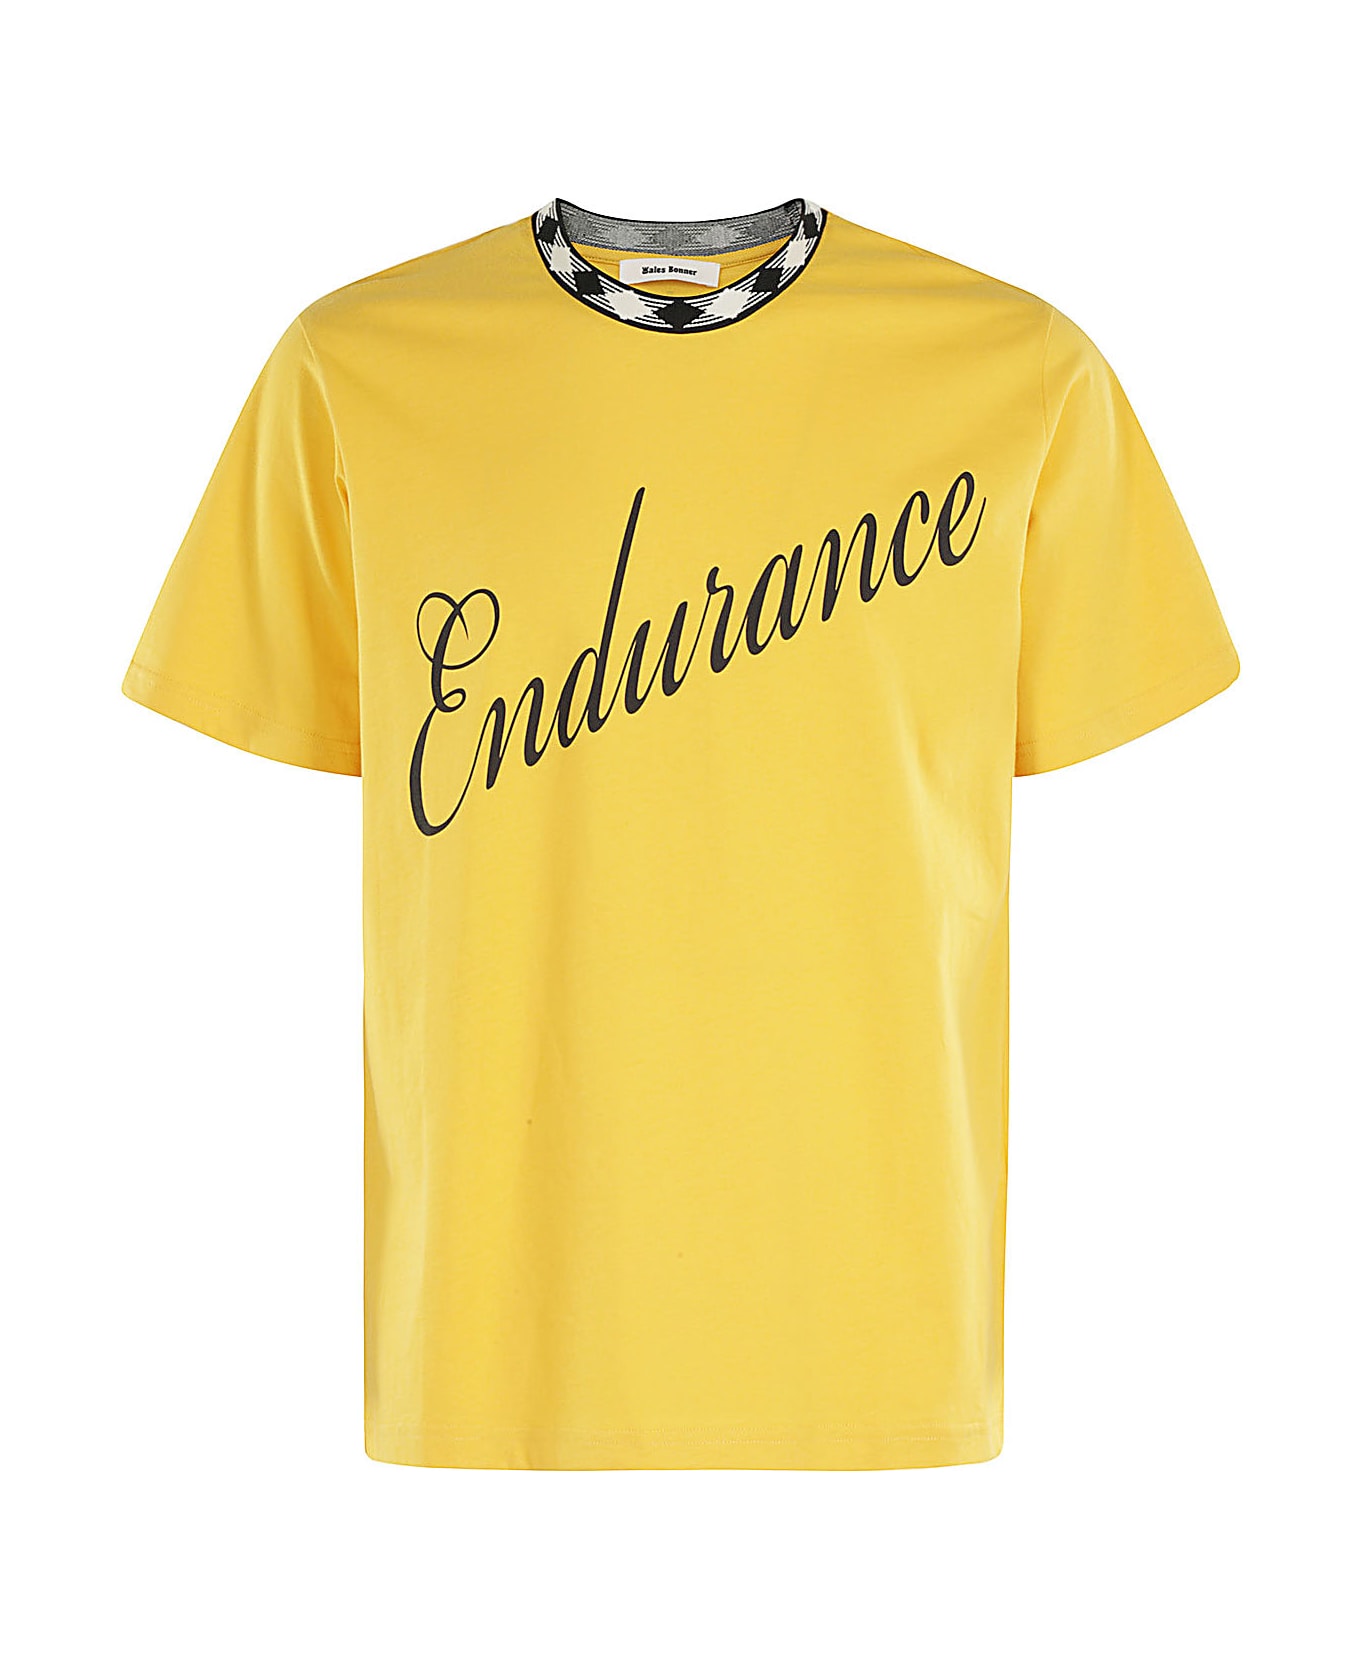 Wales Bonner Endurance T Shirt - Turmeric シャツ